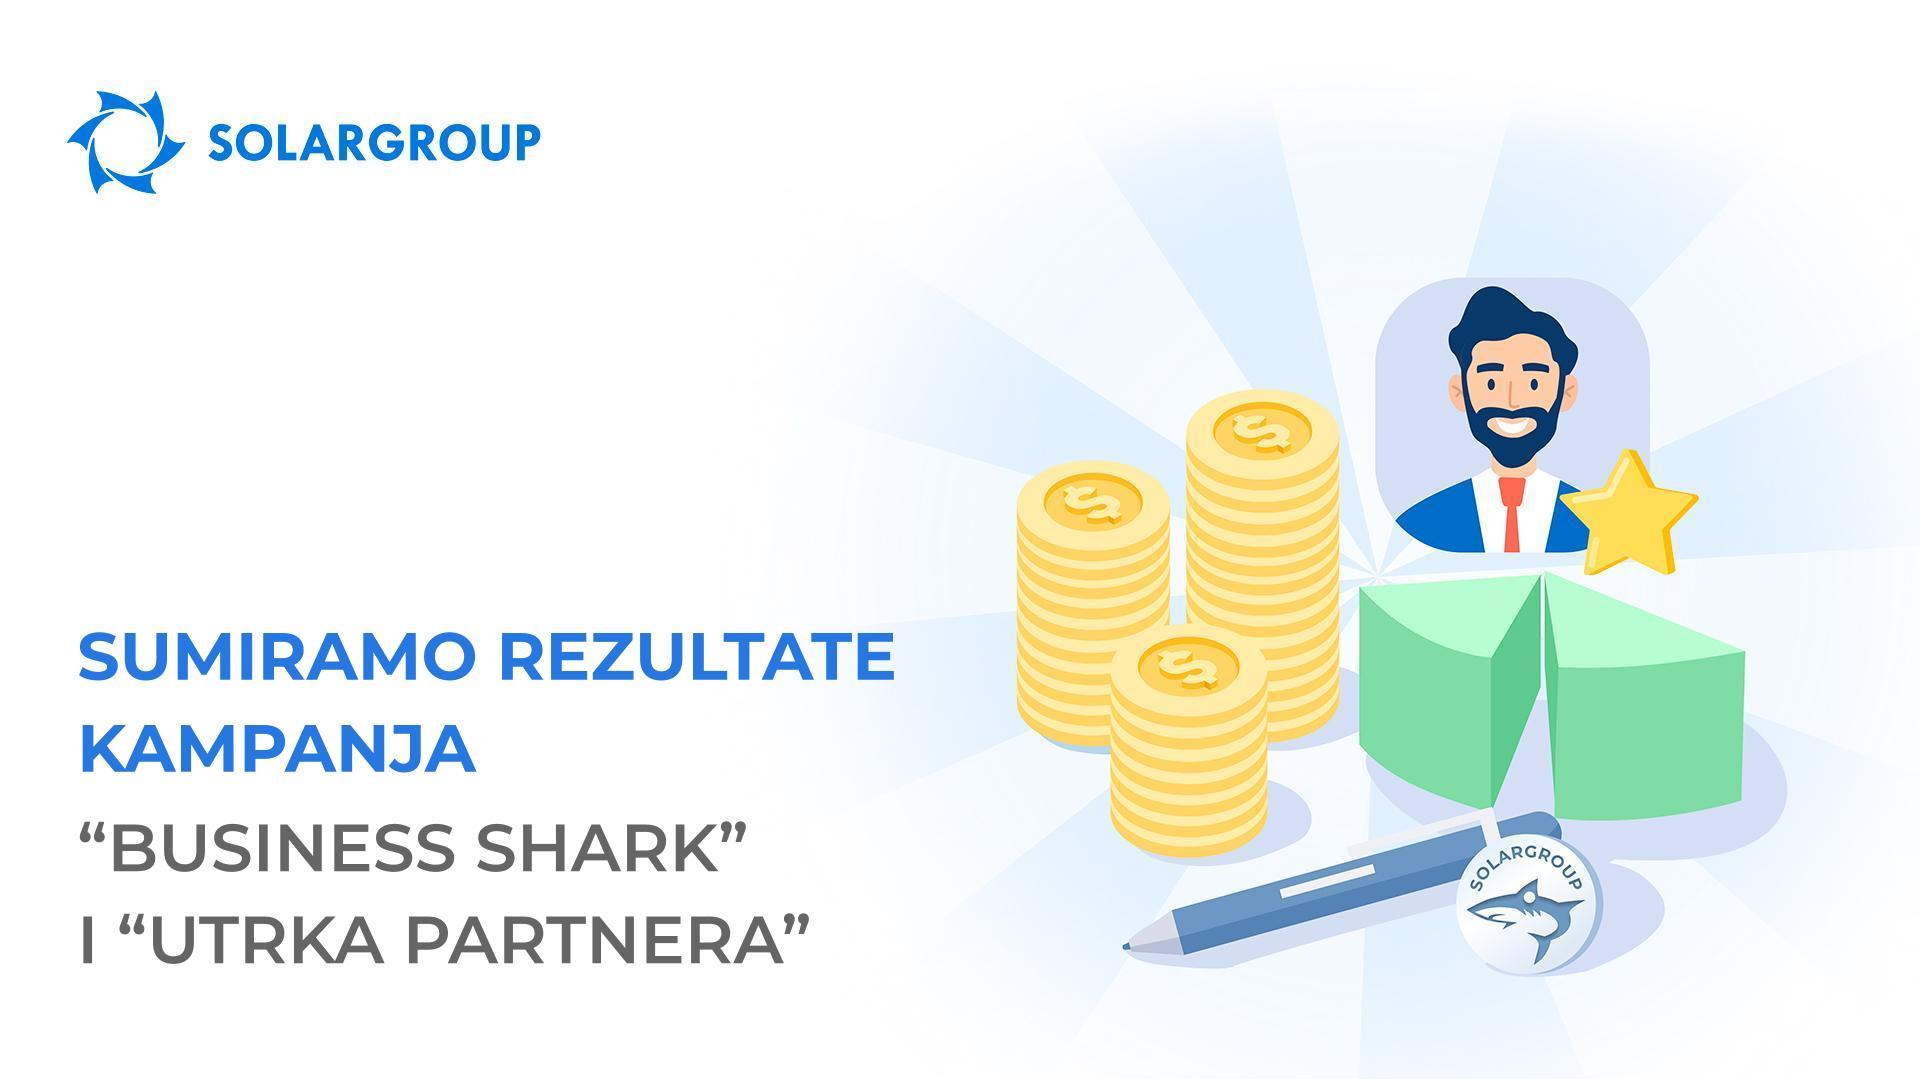 Sumiramo rezultate kampanja "Business Shark" i "Utrka partnera"!